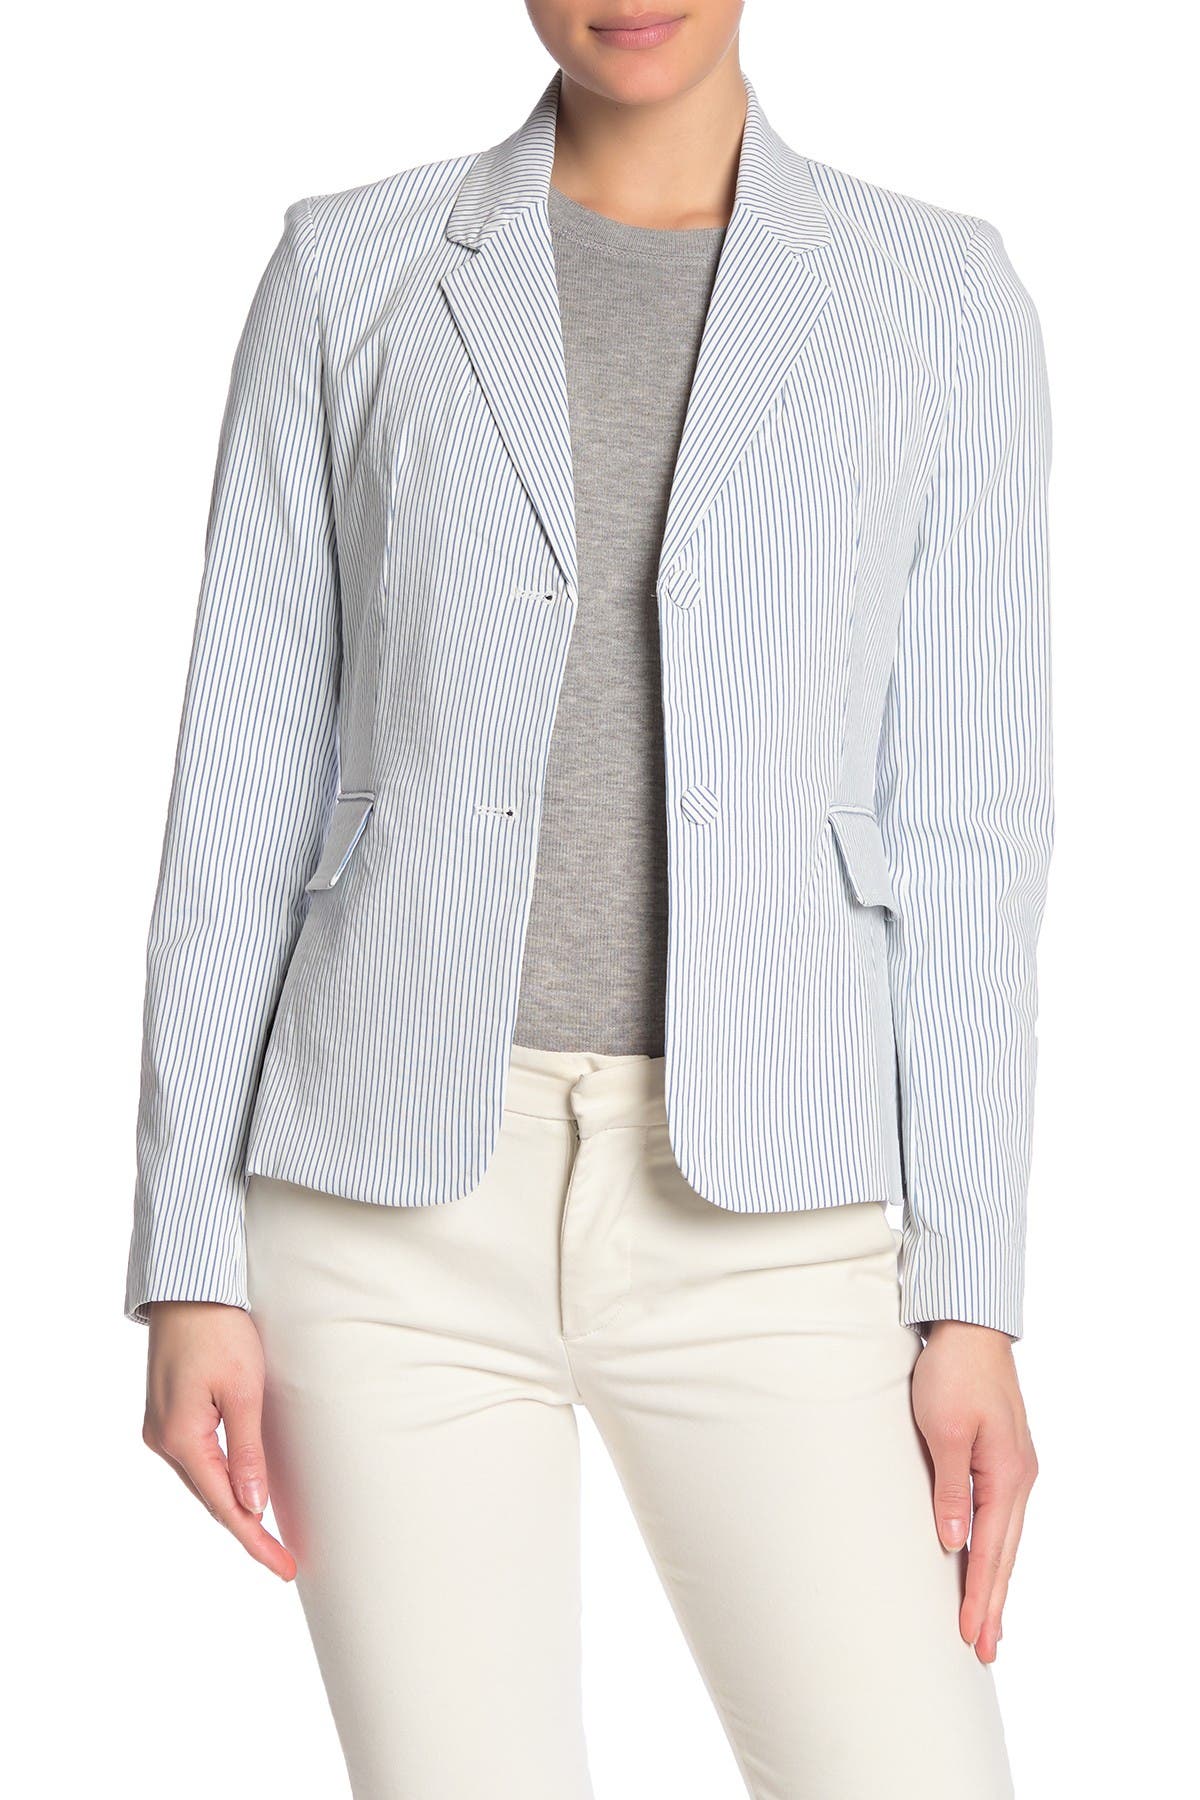 A New Day Women's Striped Seersucker career professional blazer jacket 